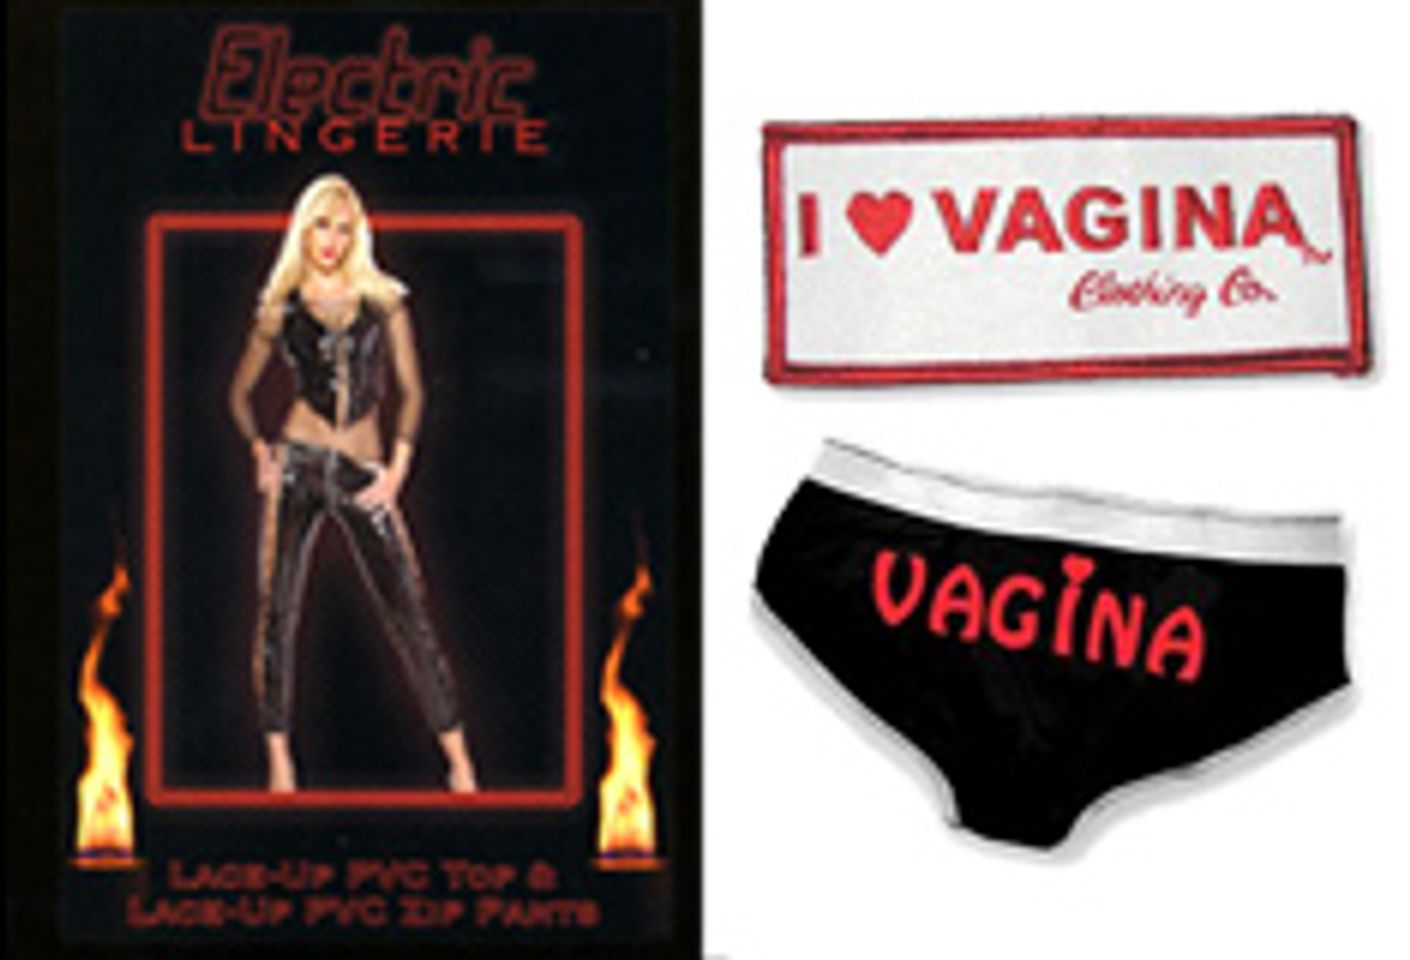 I Love Vagina Clothing, Electric Lingerie Team Up